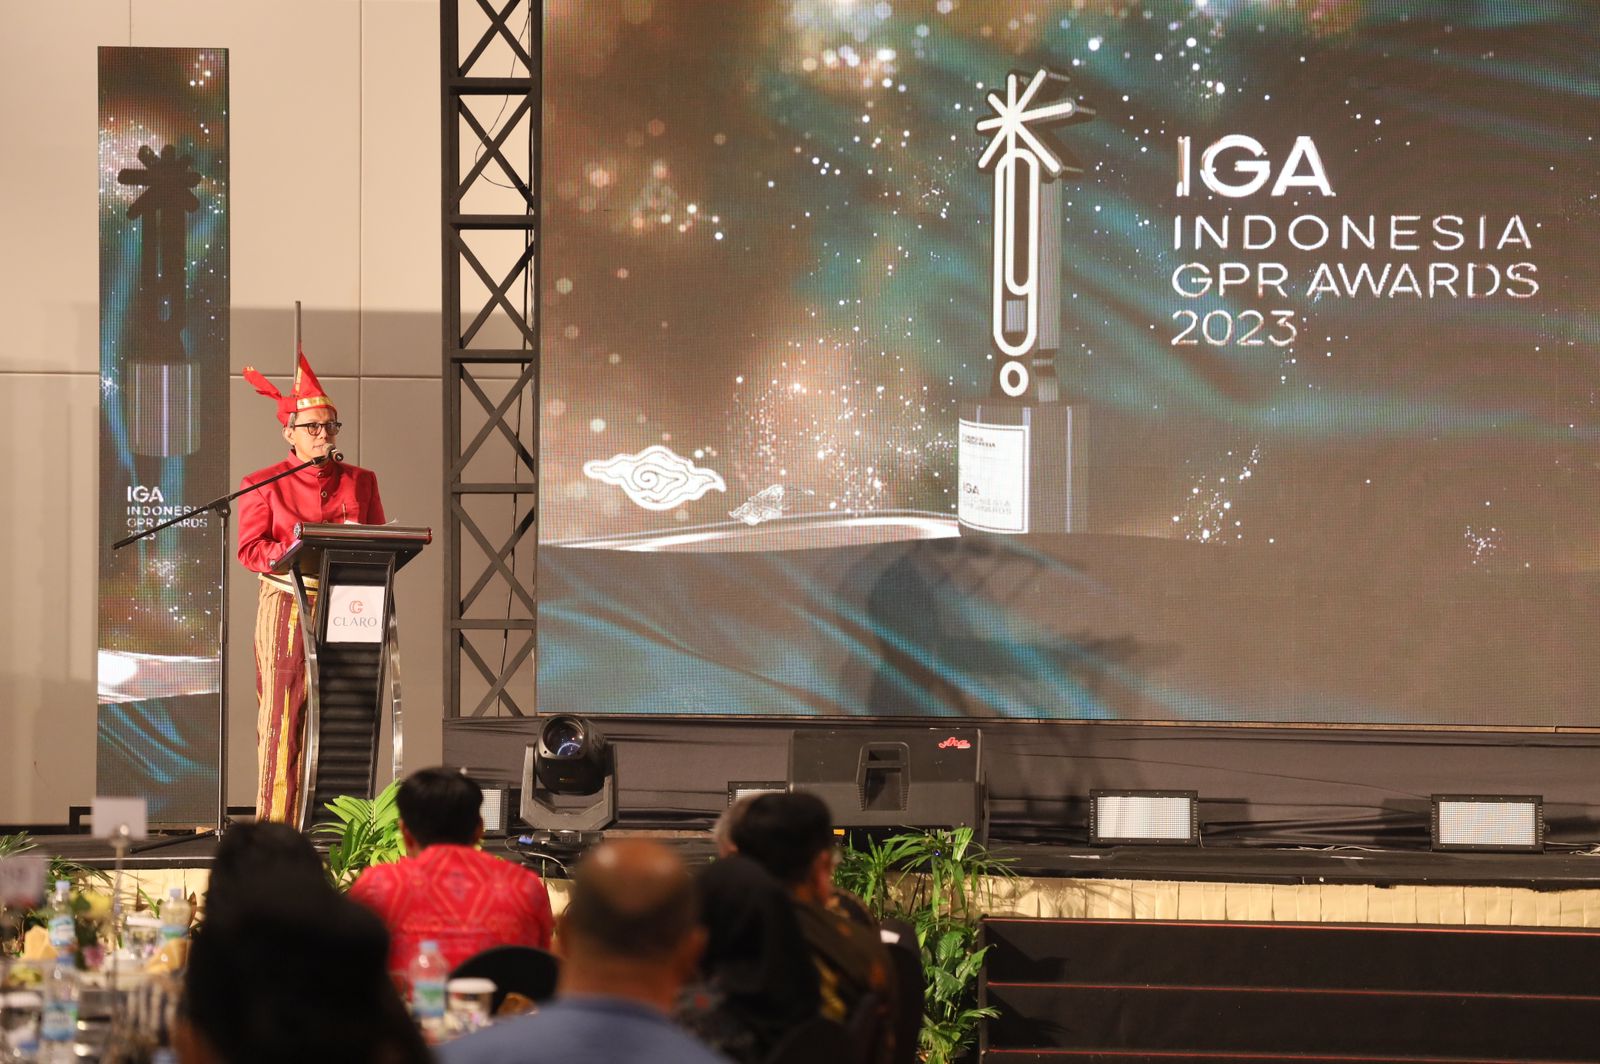 IGA Award, CEO Humas Indonesia Sebut Lorong Wisata Inovasi yang Patut Ditiru